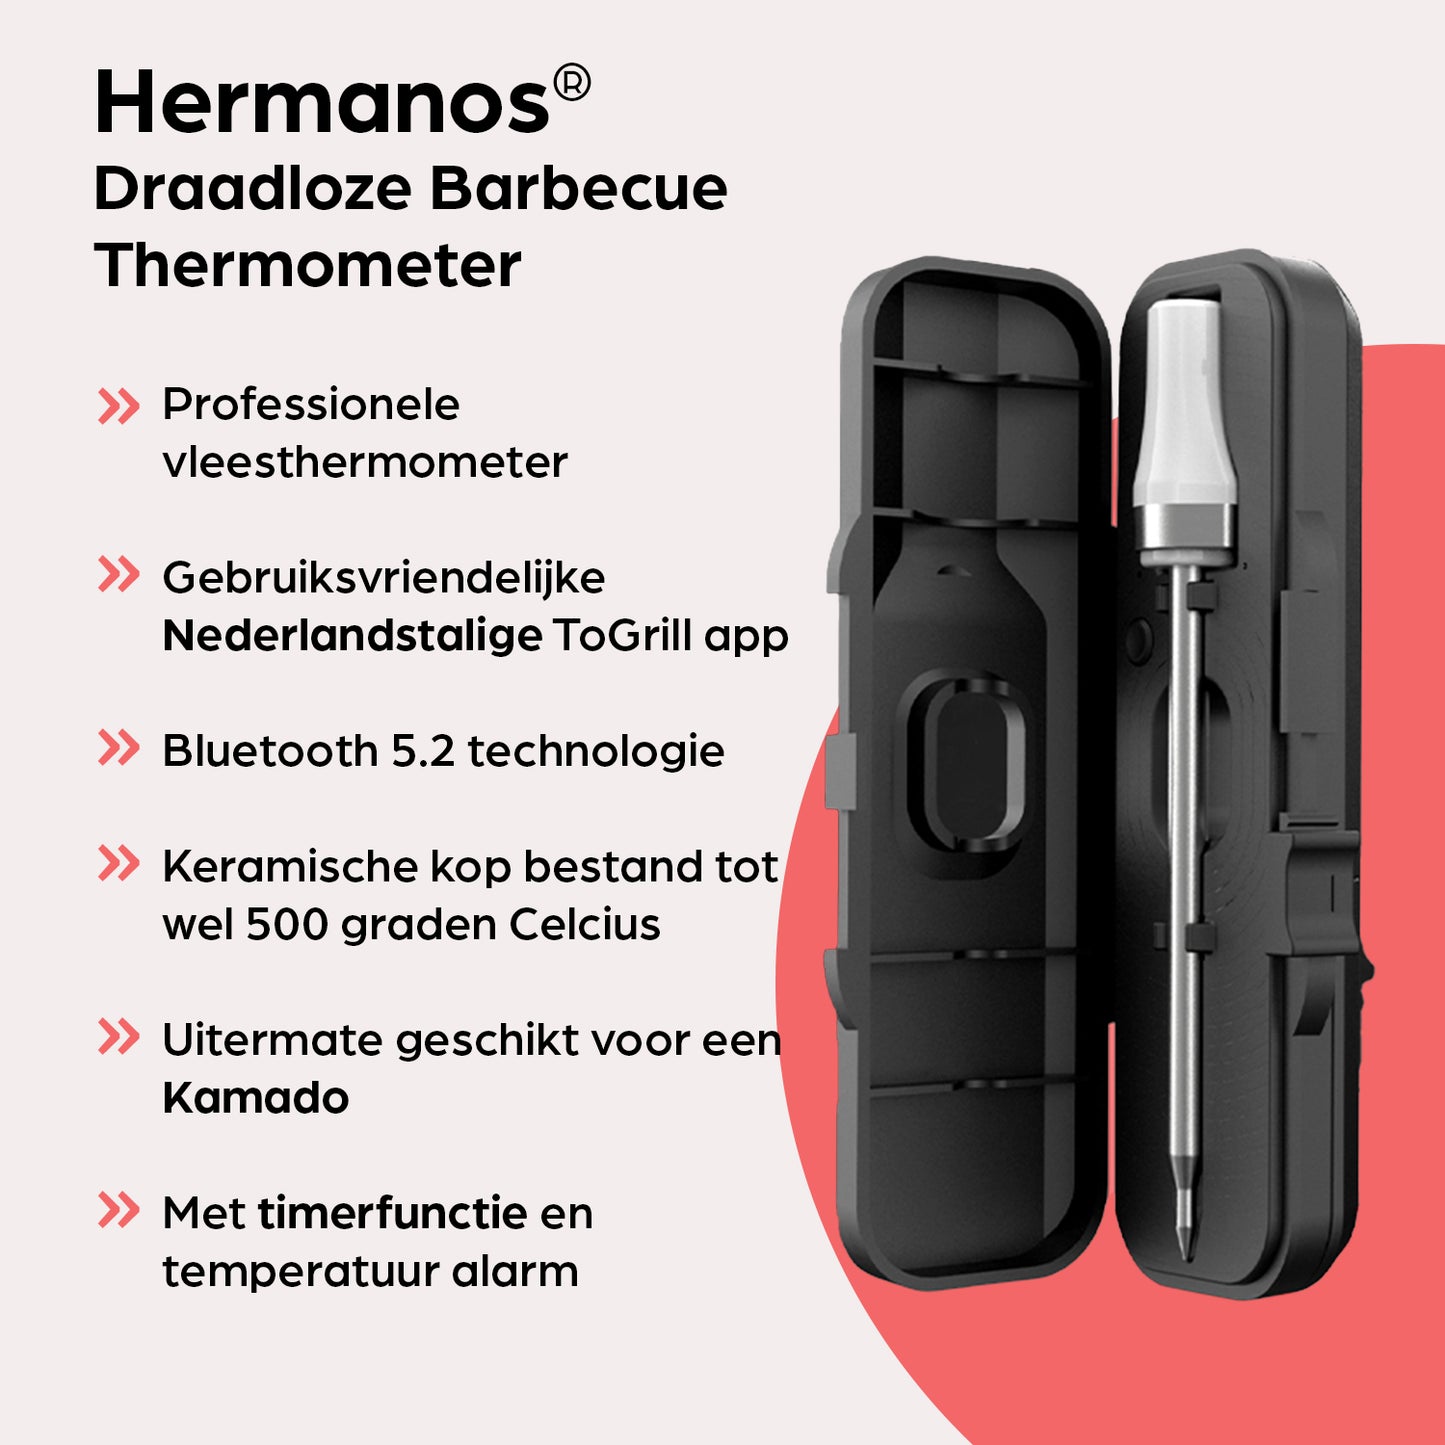 Draadloze Barbecue Thermometer met App - HWT01